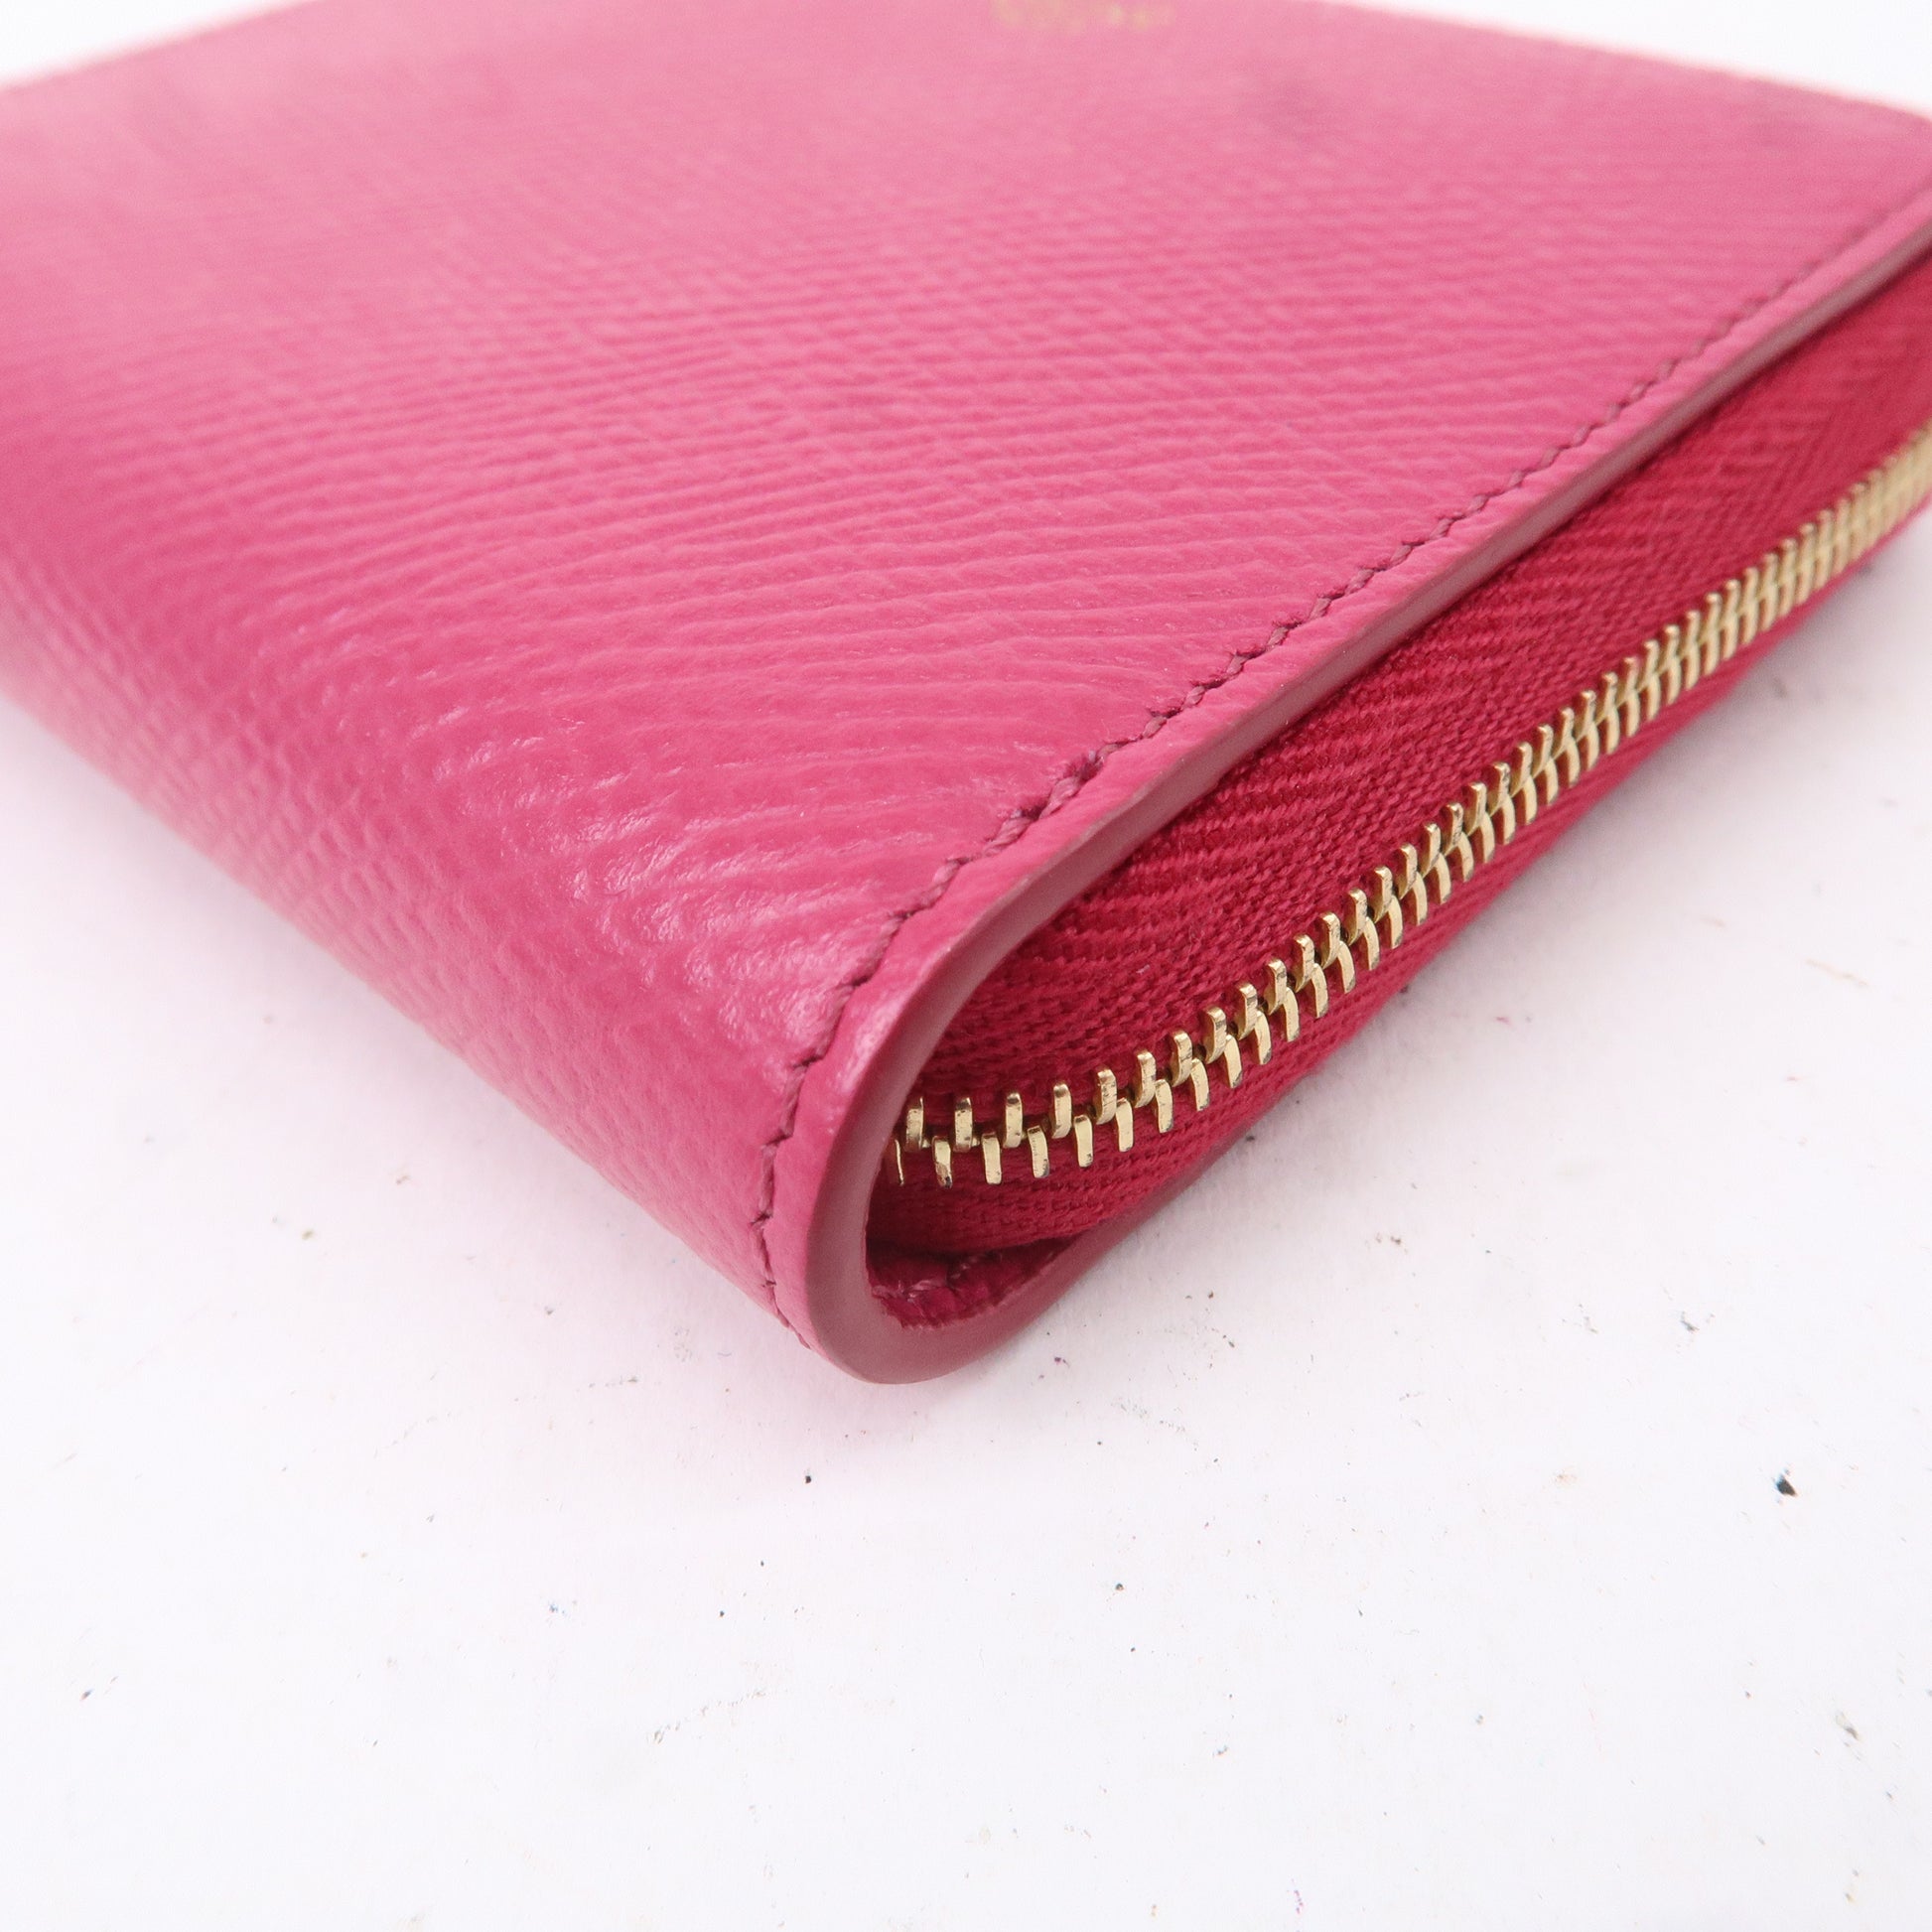 Celine Compact Zipped Wallet